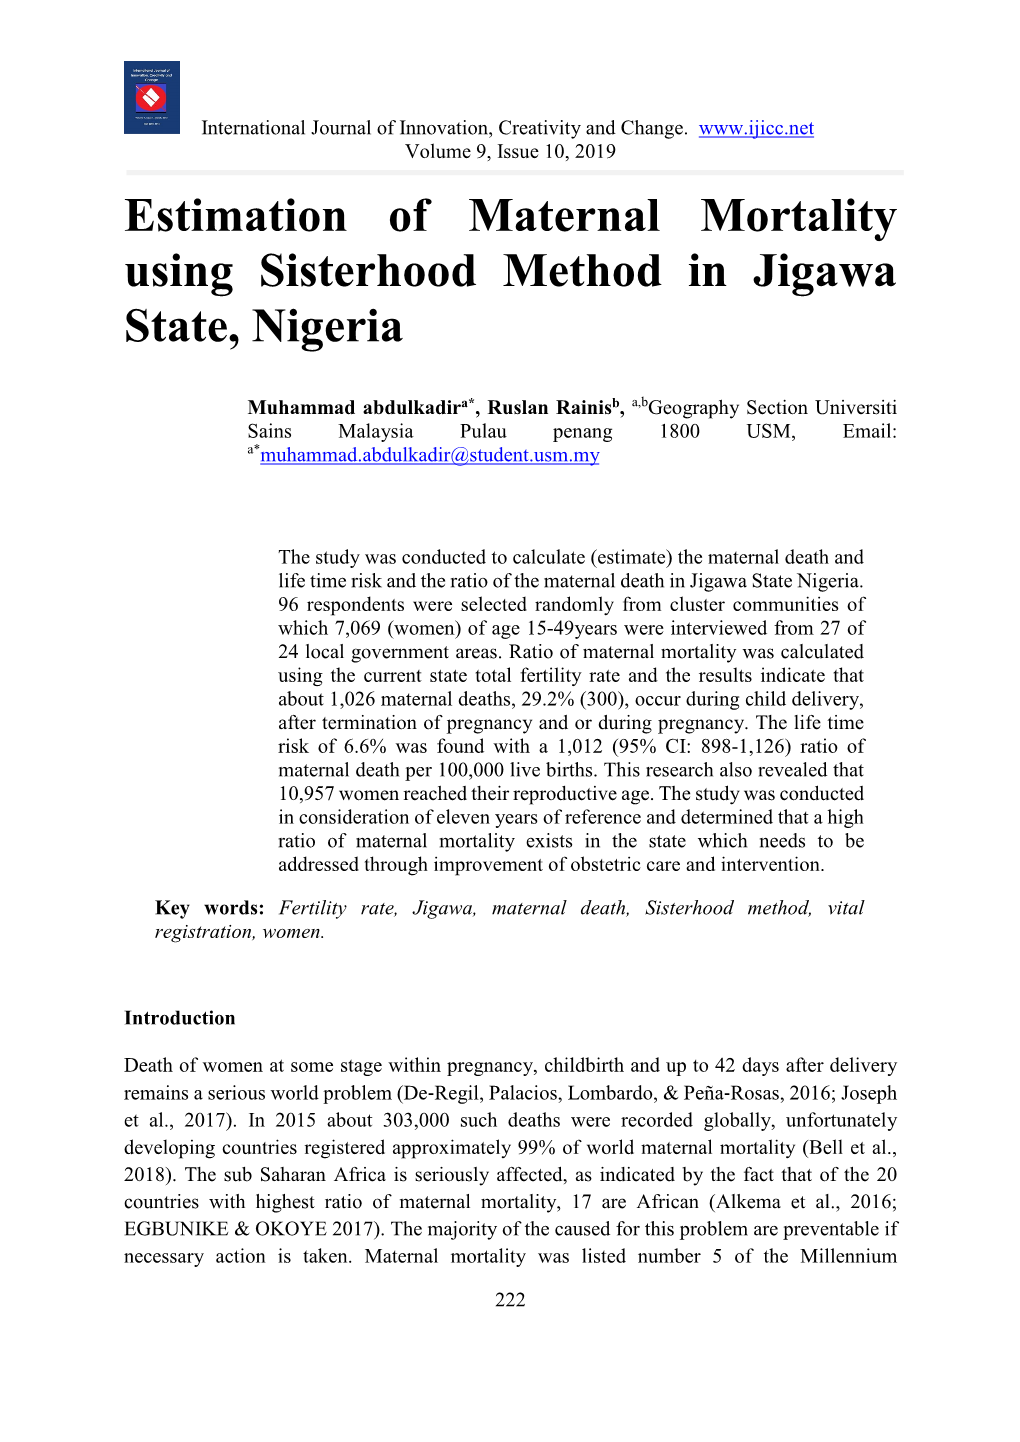 Estimation of Maternal Mortality Using Sisterhood Method in Jigawa State, Nigeria